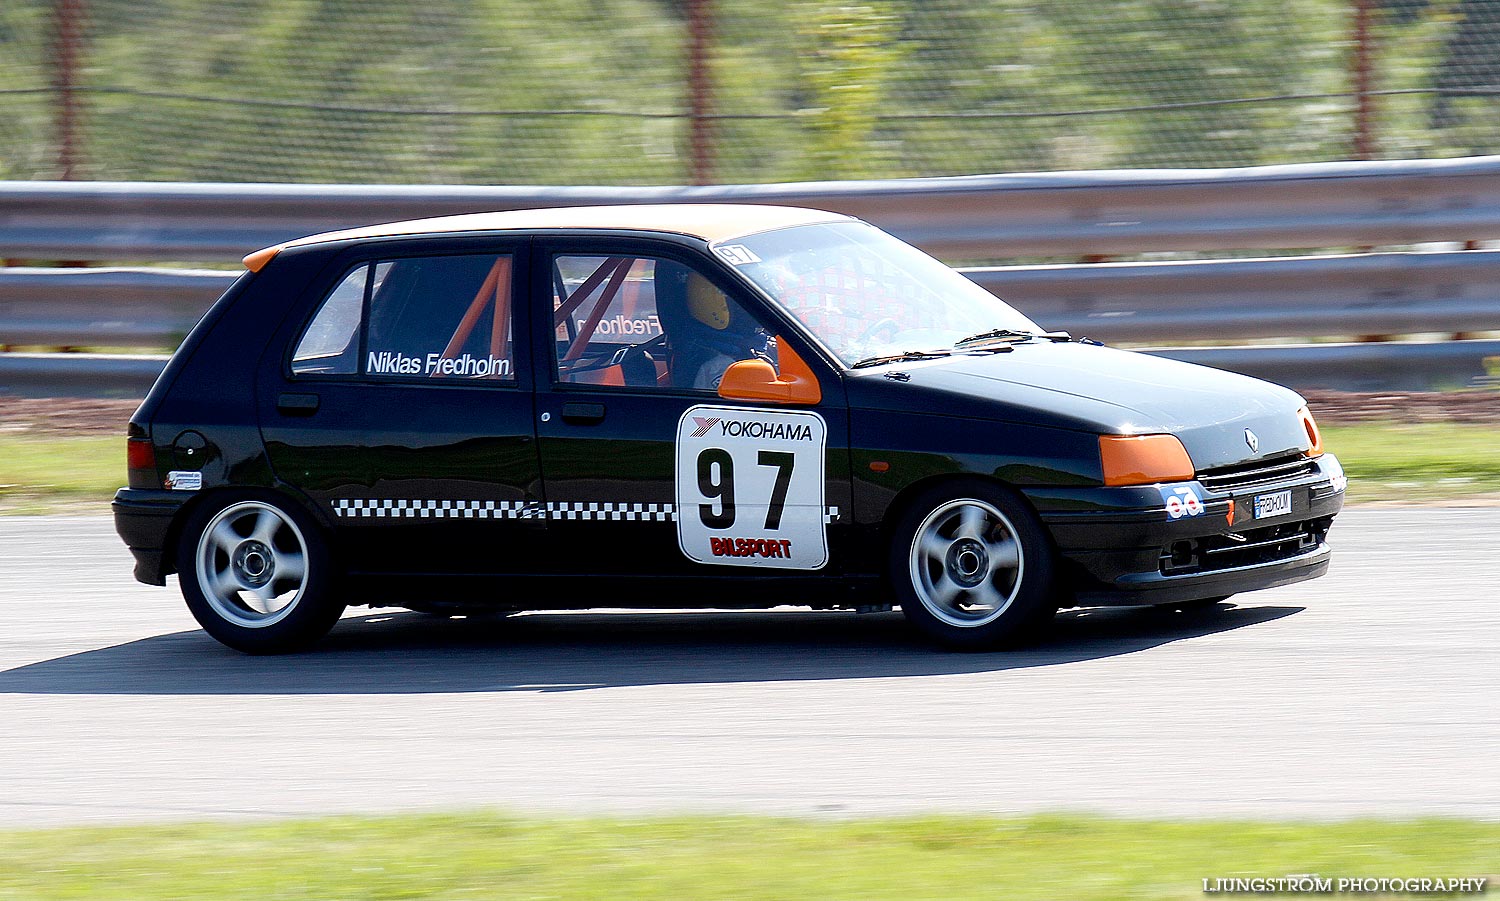 SSK Raceweek,mix,Kinnekulle Ring,Götene,Sverige,Motorsport,,2011,44543